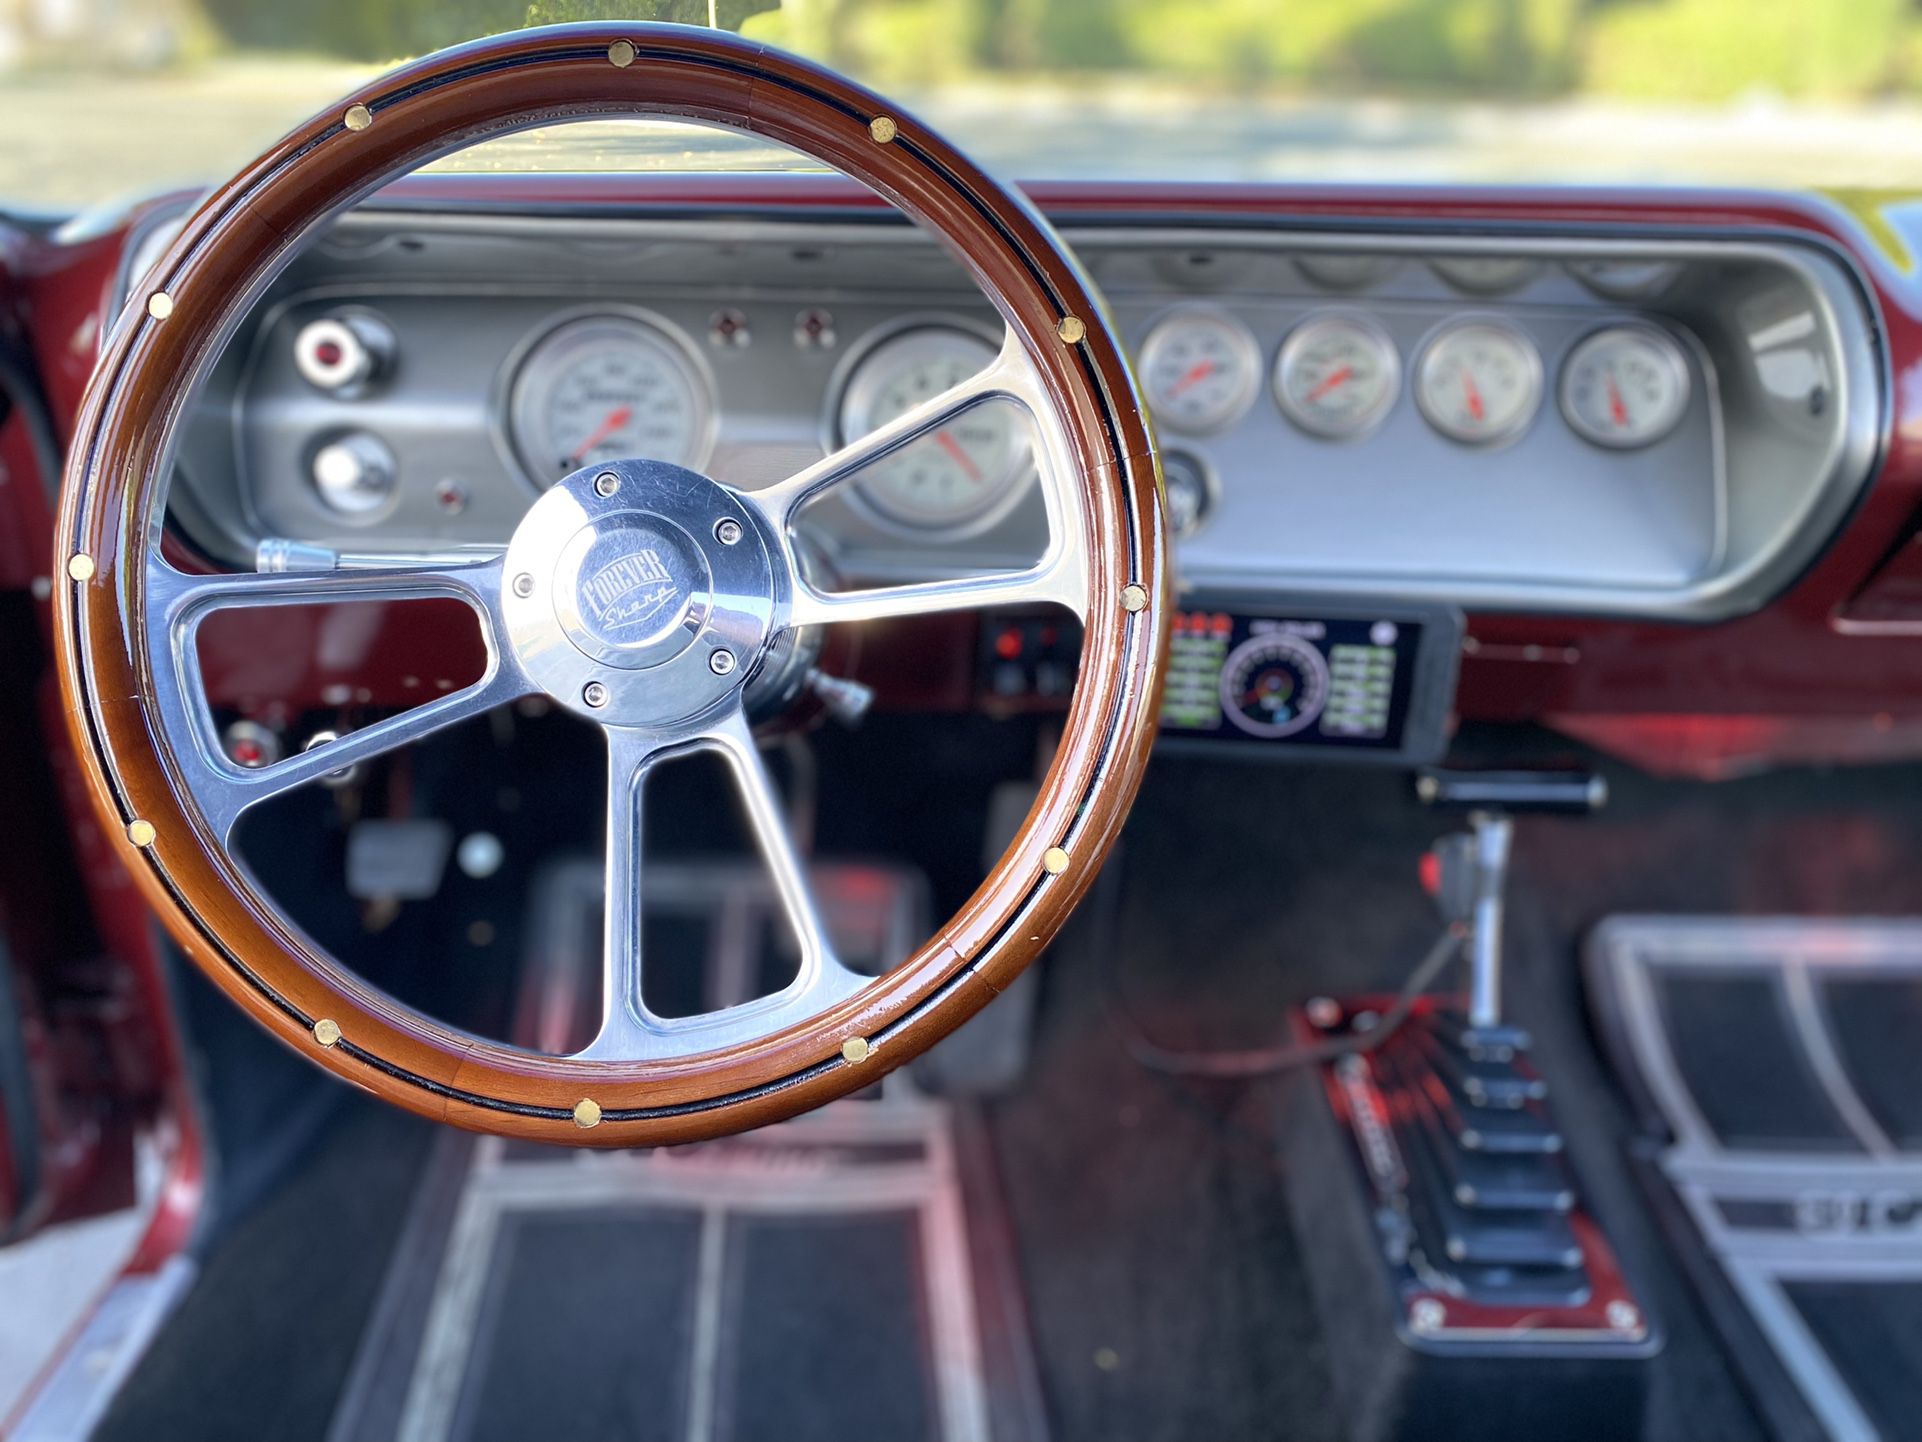 1964 Chevrolet El Camino ( Chevy Chevelle Nova Muscle Car Classic Low Rider )